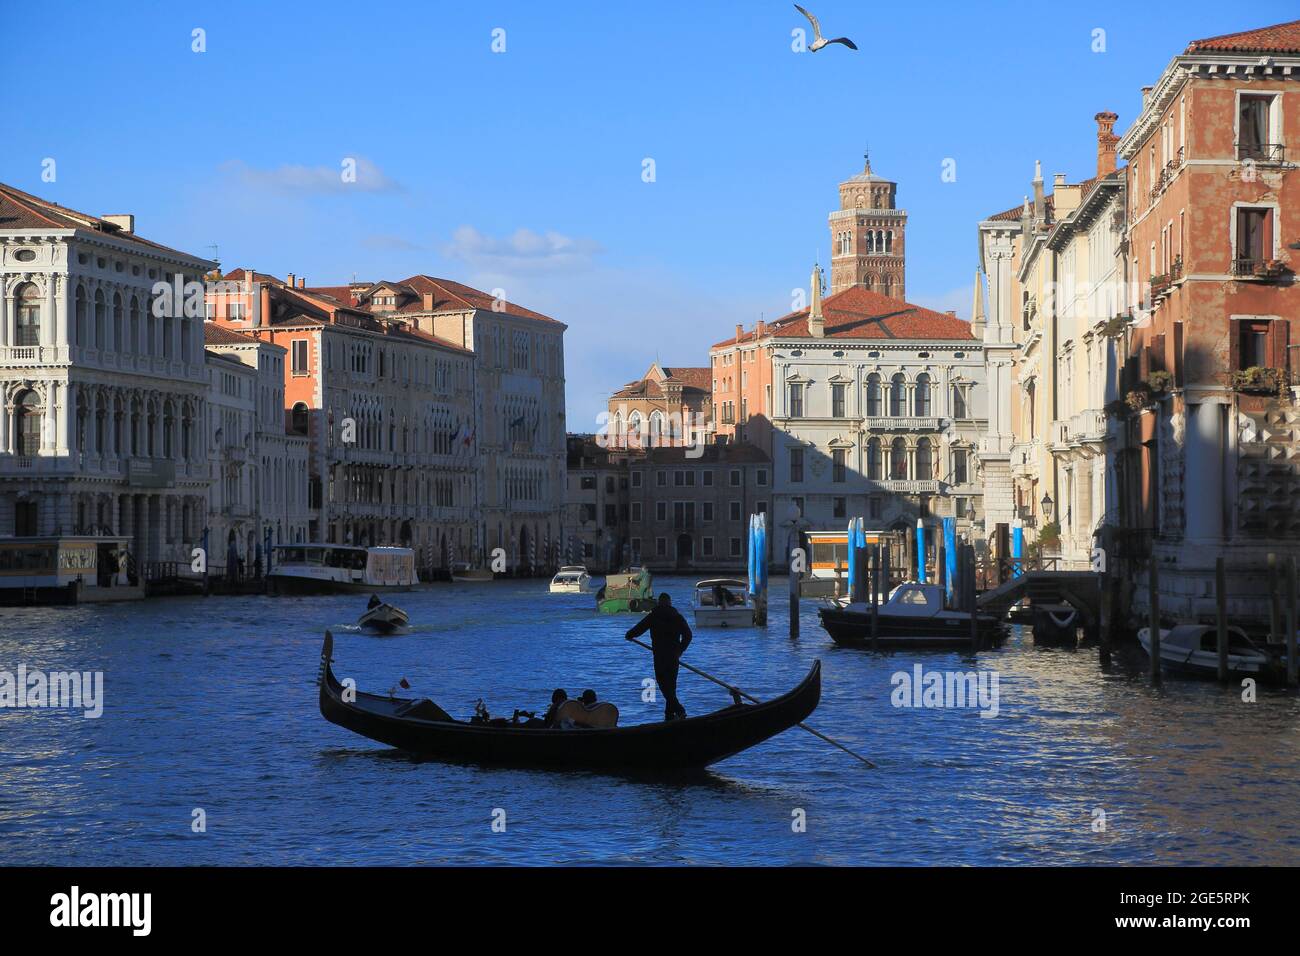 Gondola on the Grand Canal, f.l.t.r. Ca' Rezzonico, Palazzo Bernardo Nani, Ca' Bernardo, Palazzo Giustinian, Ca' Foscari, Palazzo Balbi, Venice Stock Photo